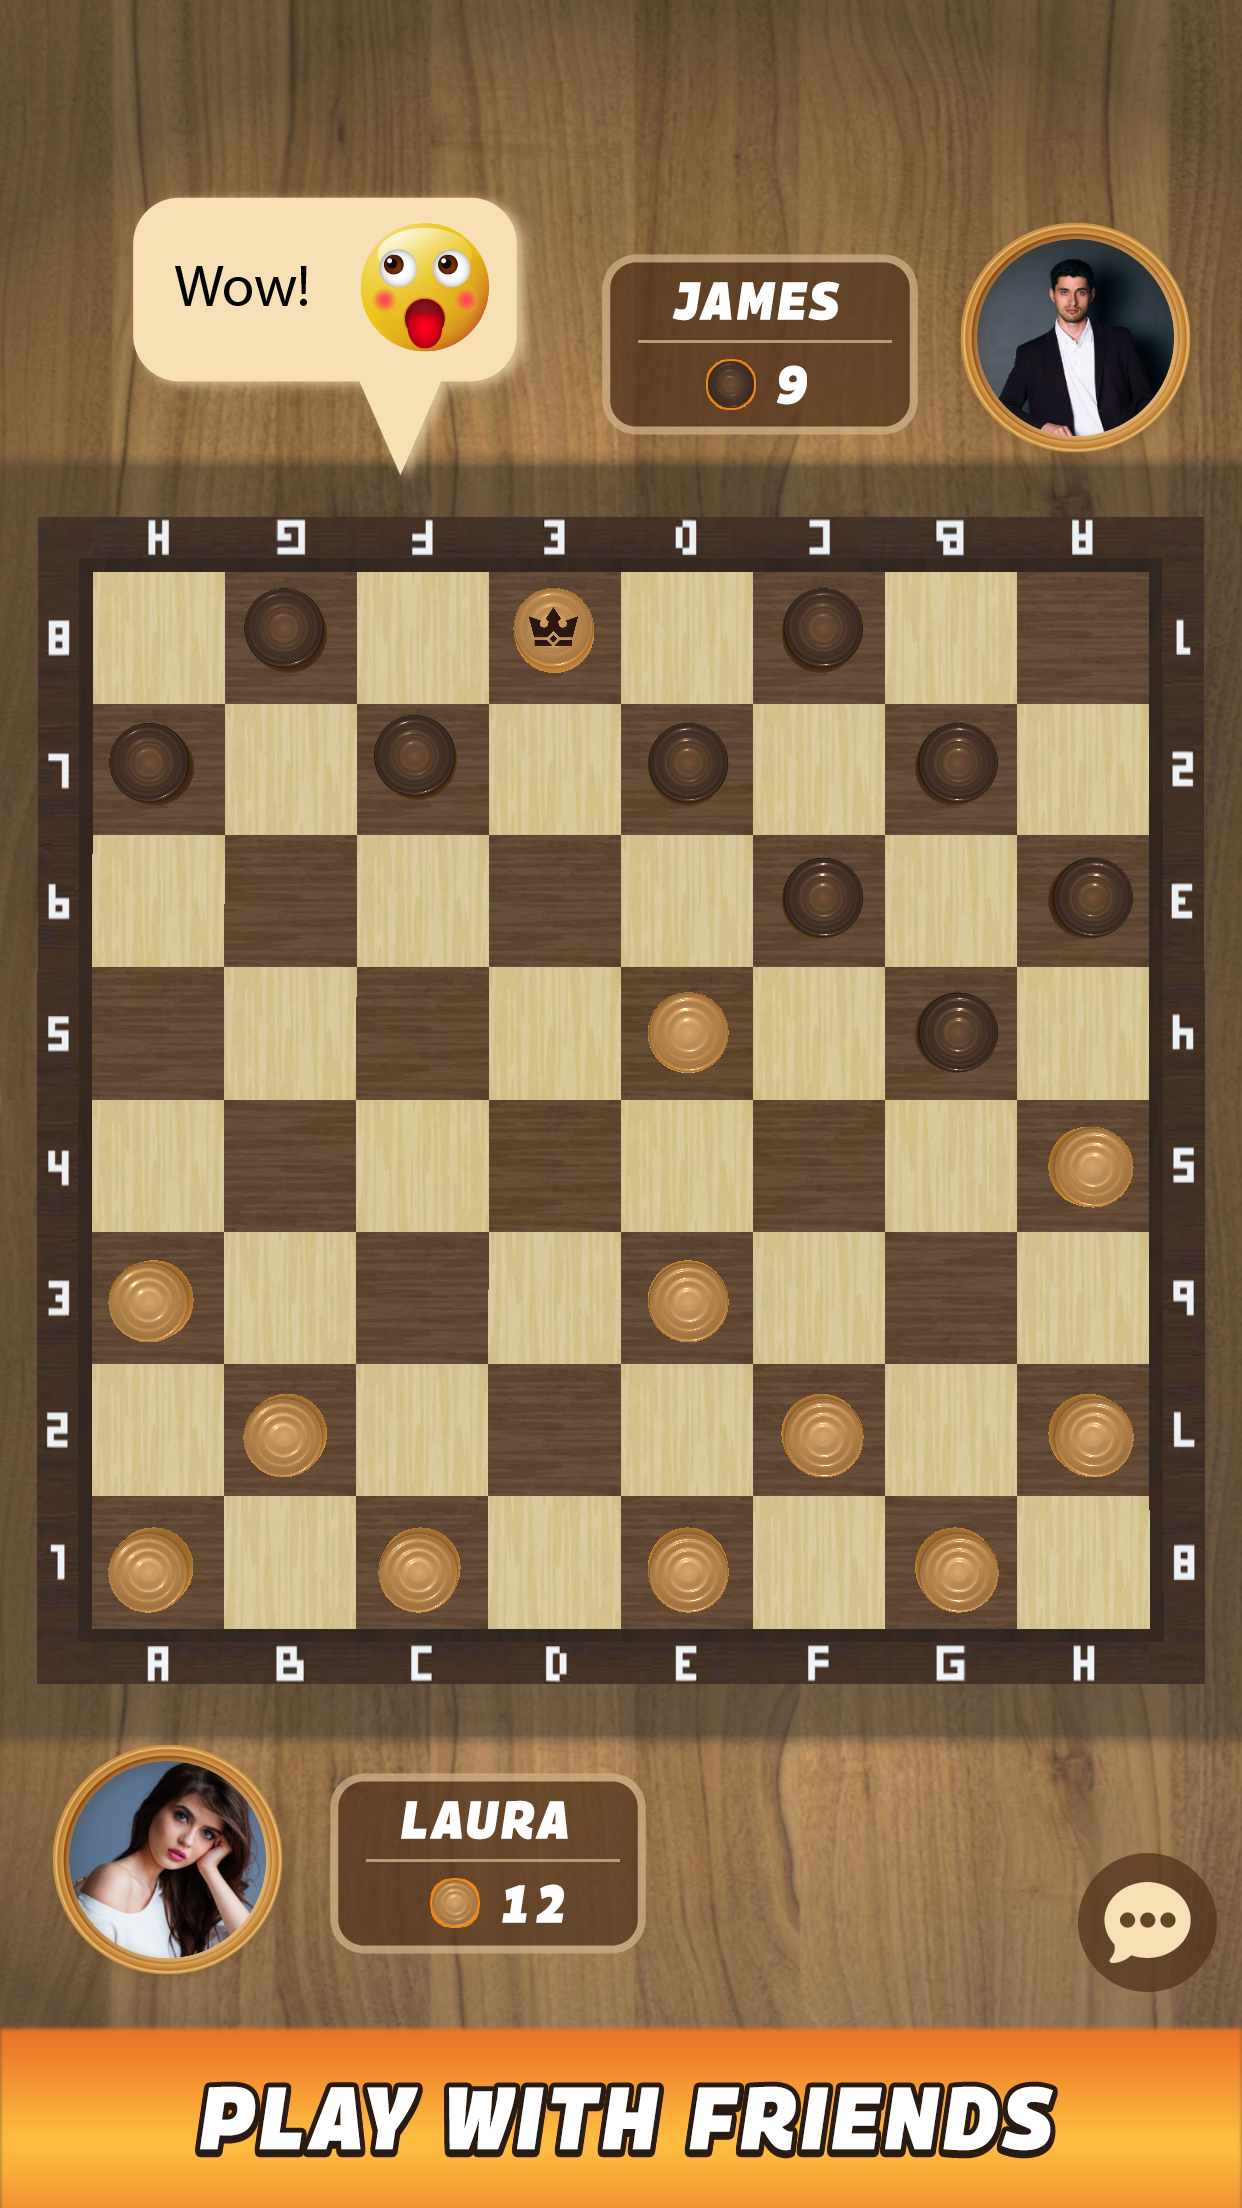 Checkers board game